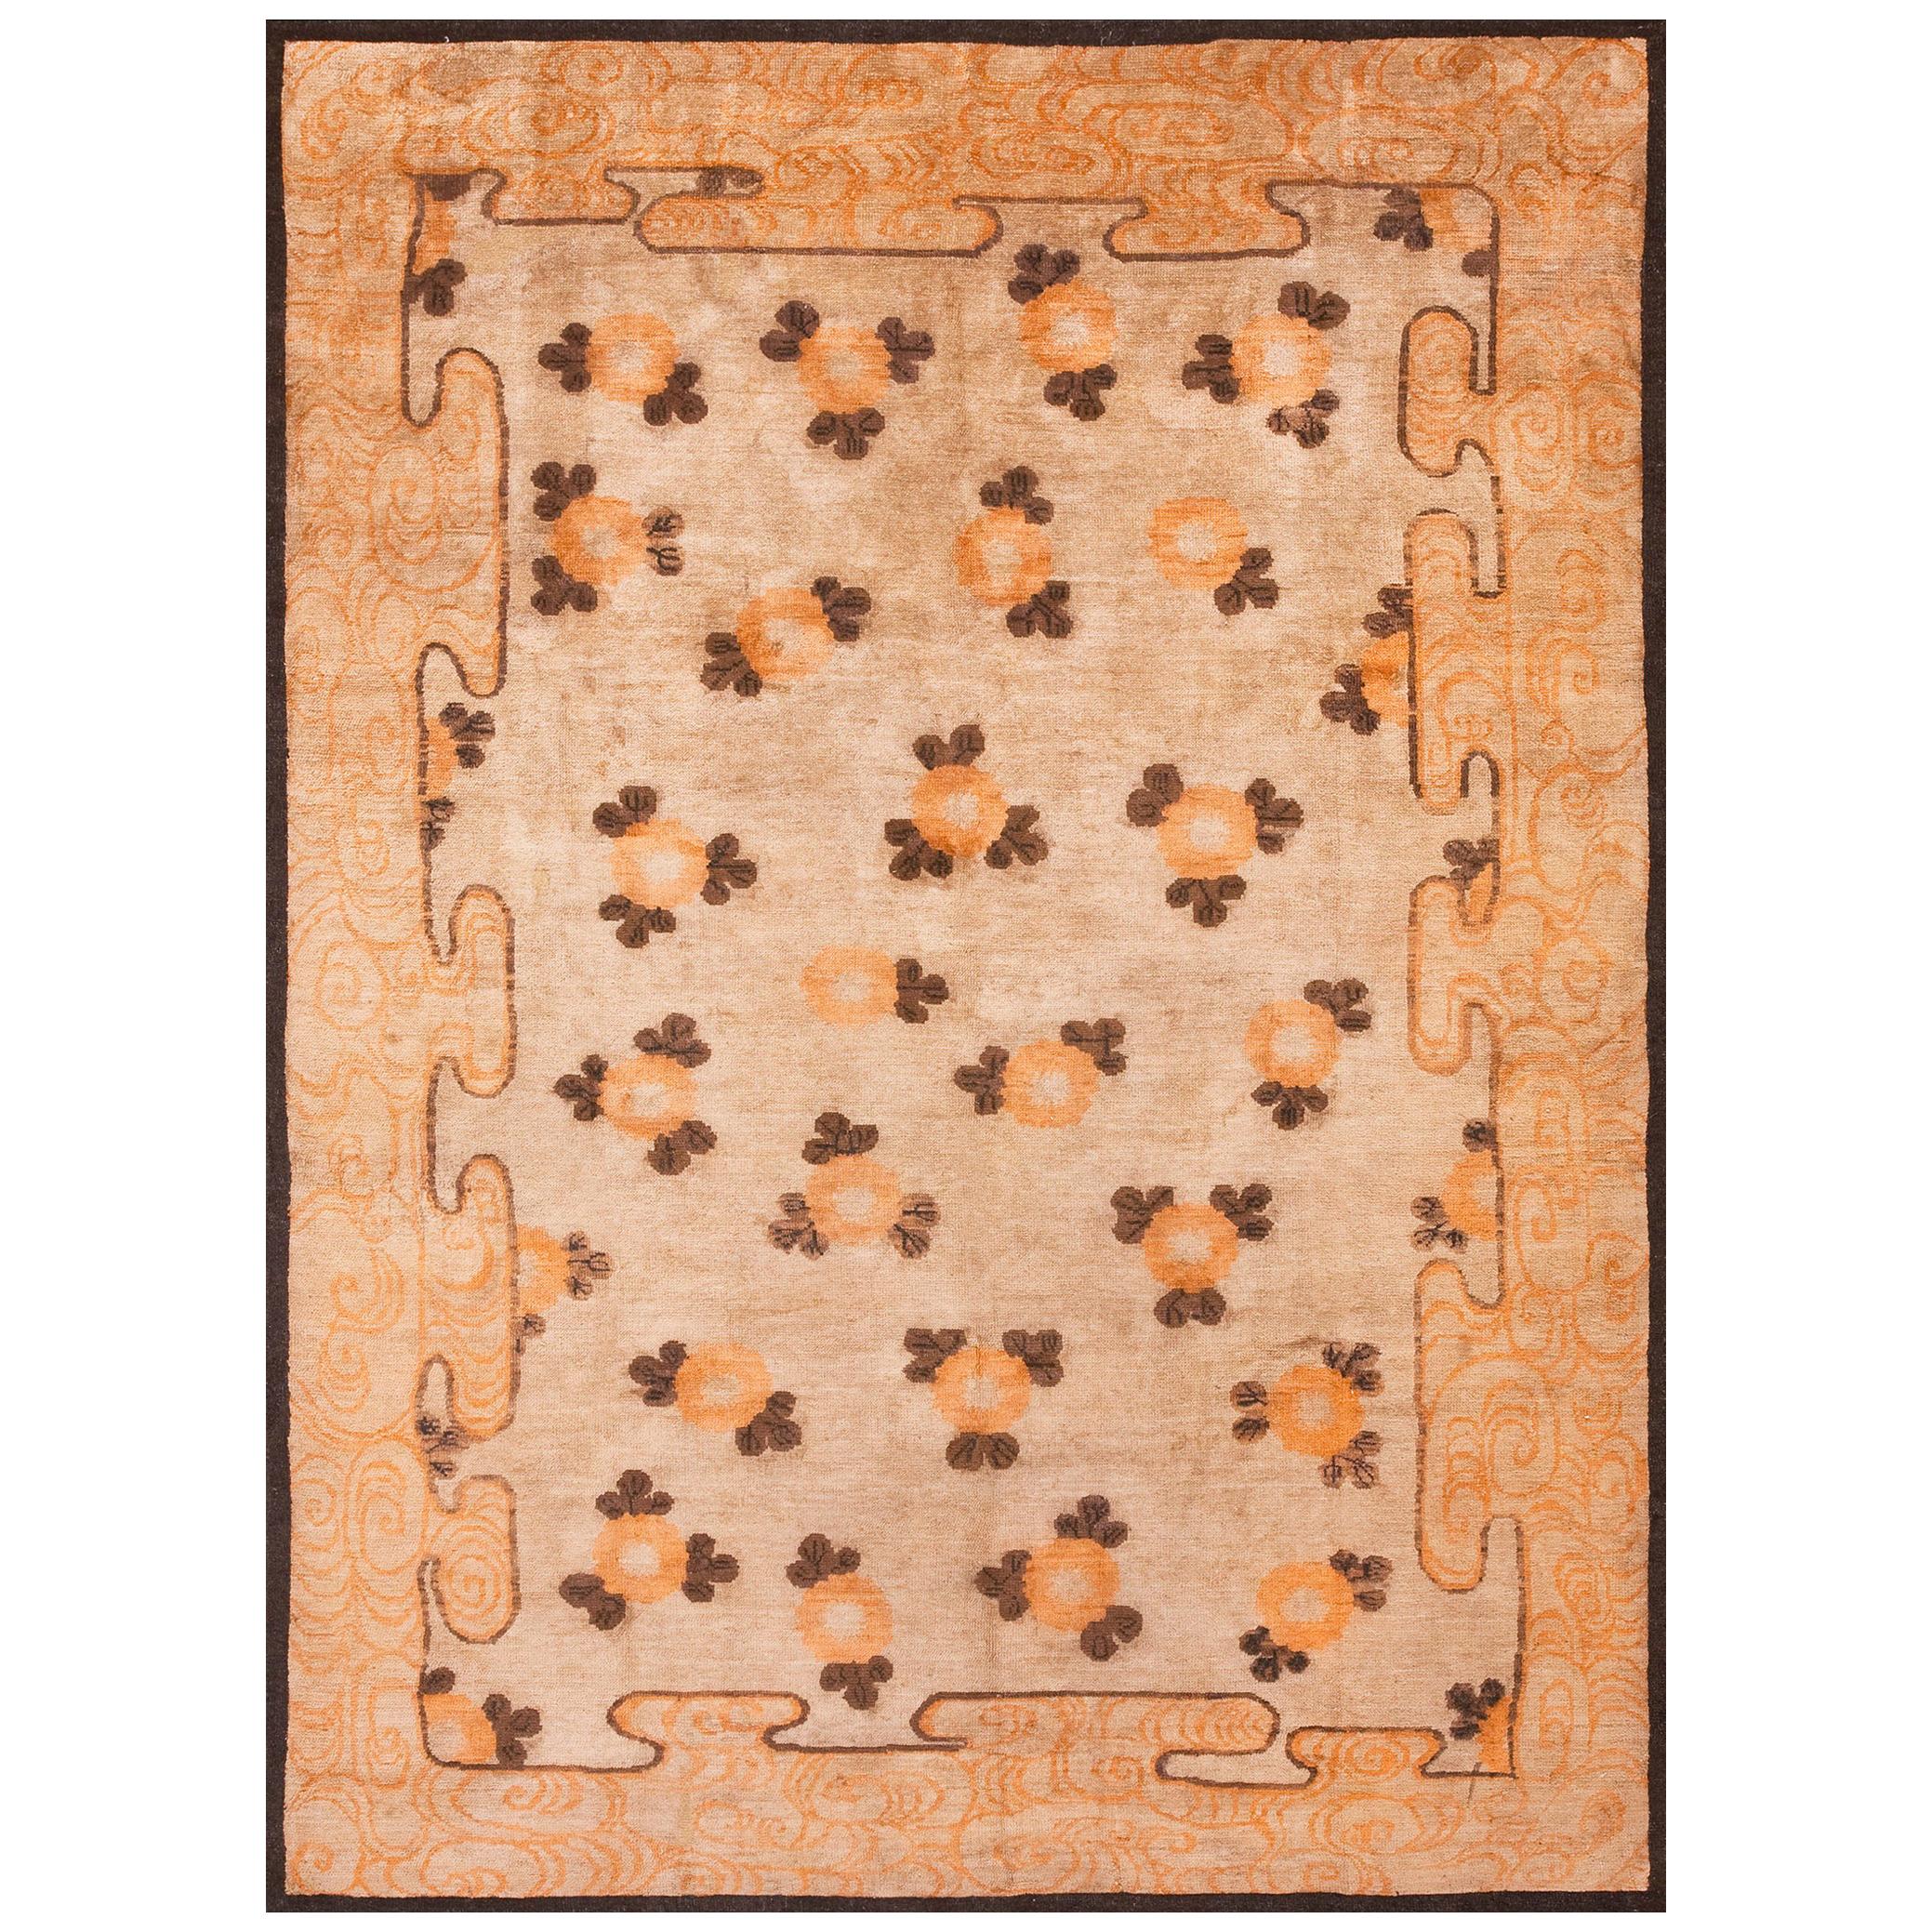 Antique Chinese - Mongolian Carpet ( 7' x 9'6" - 213 x 289 cm)